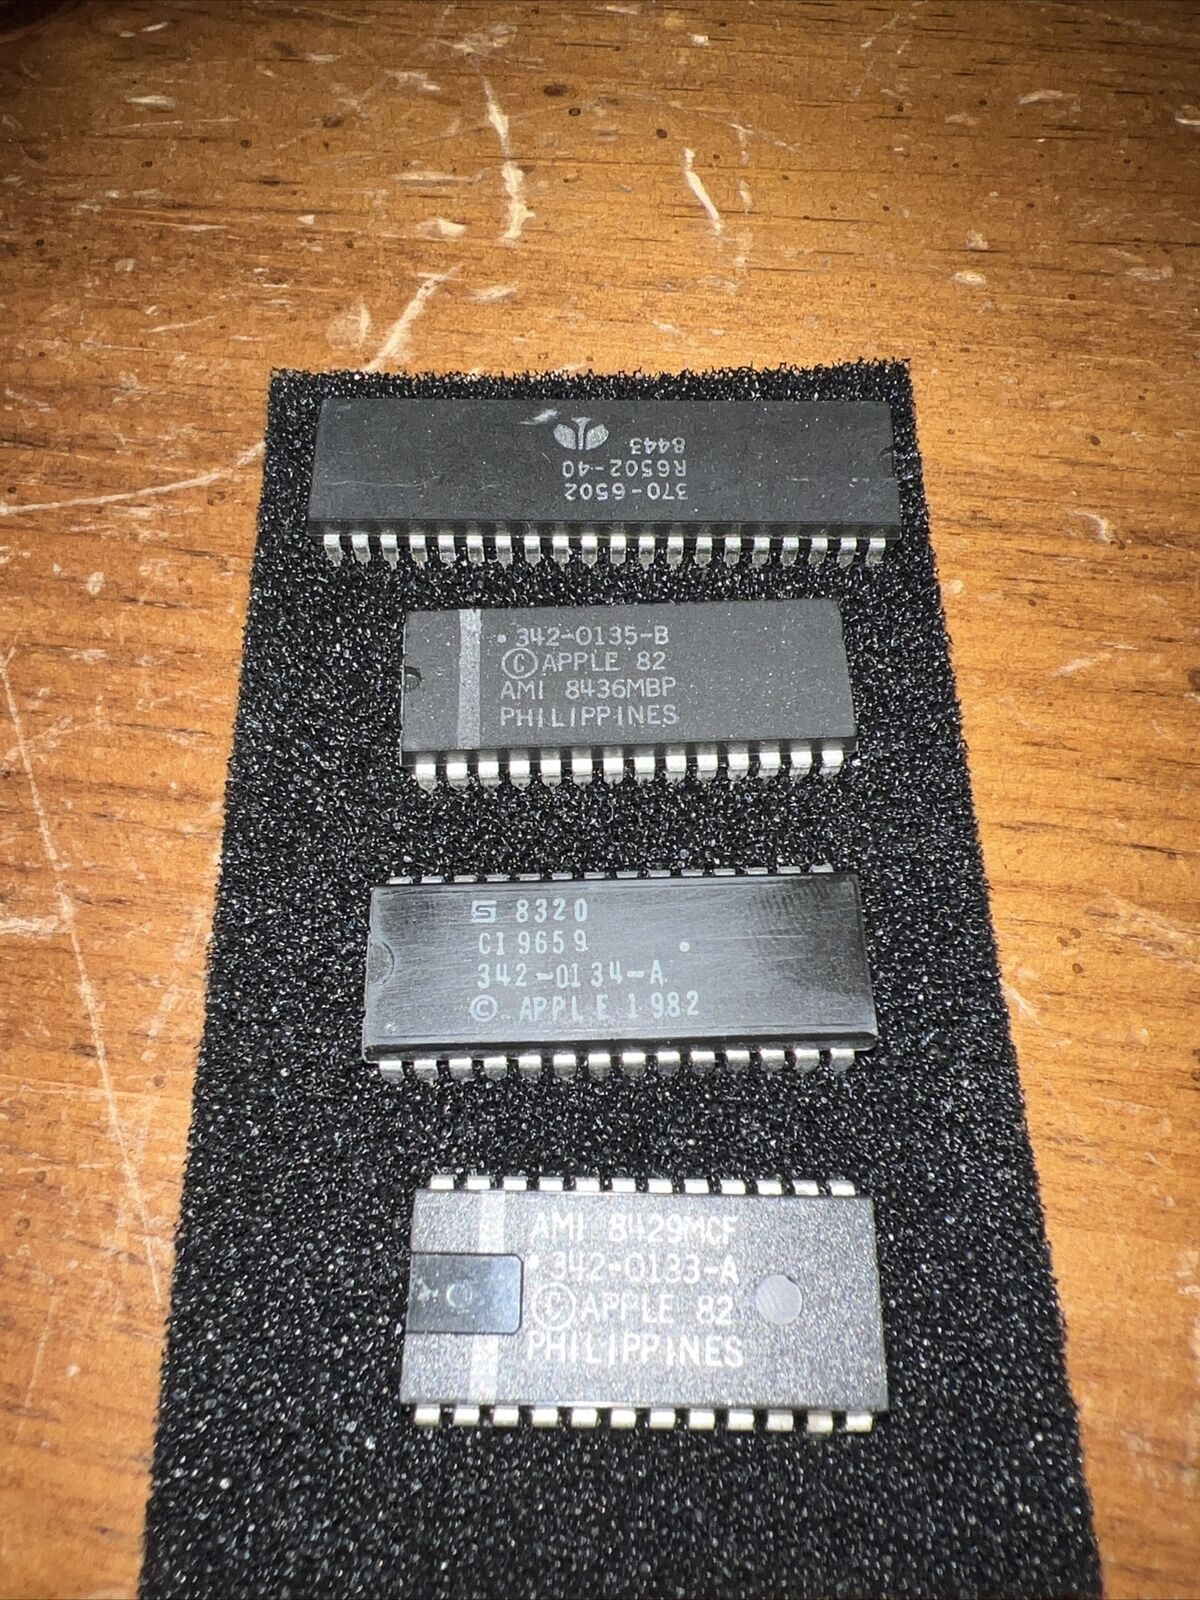 Rockwell 6502 Microprocessor Chip IC DIP-40 cpu W/ Apple IIe Chip Set